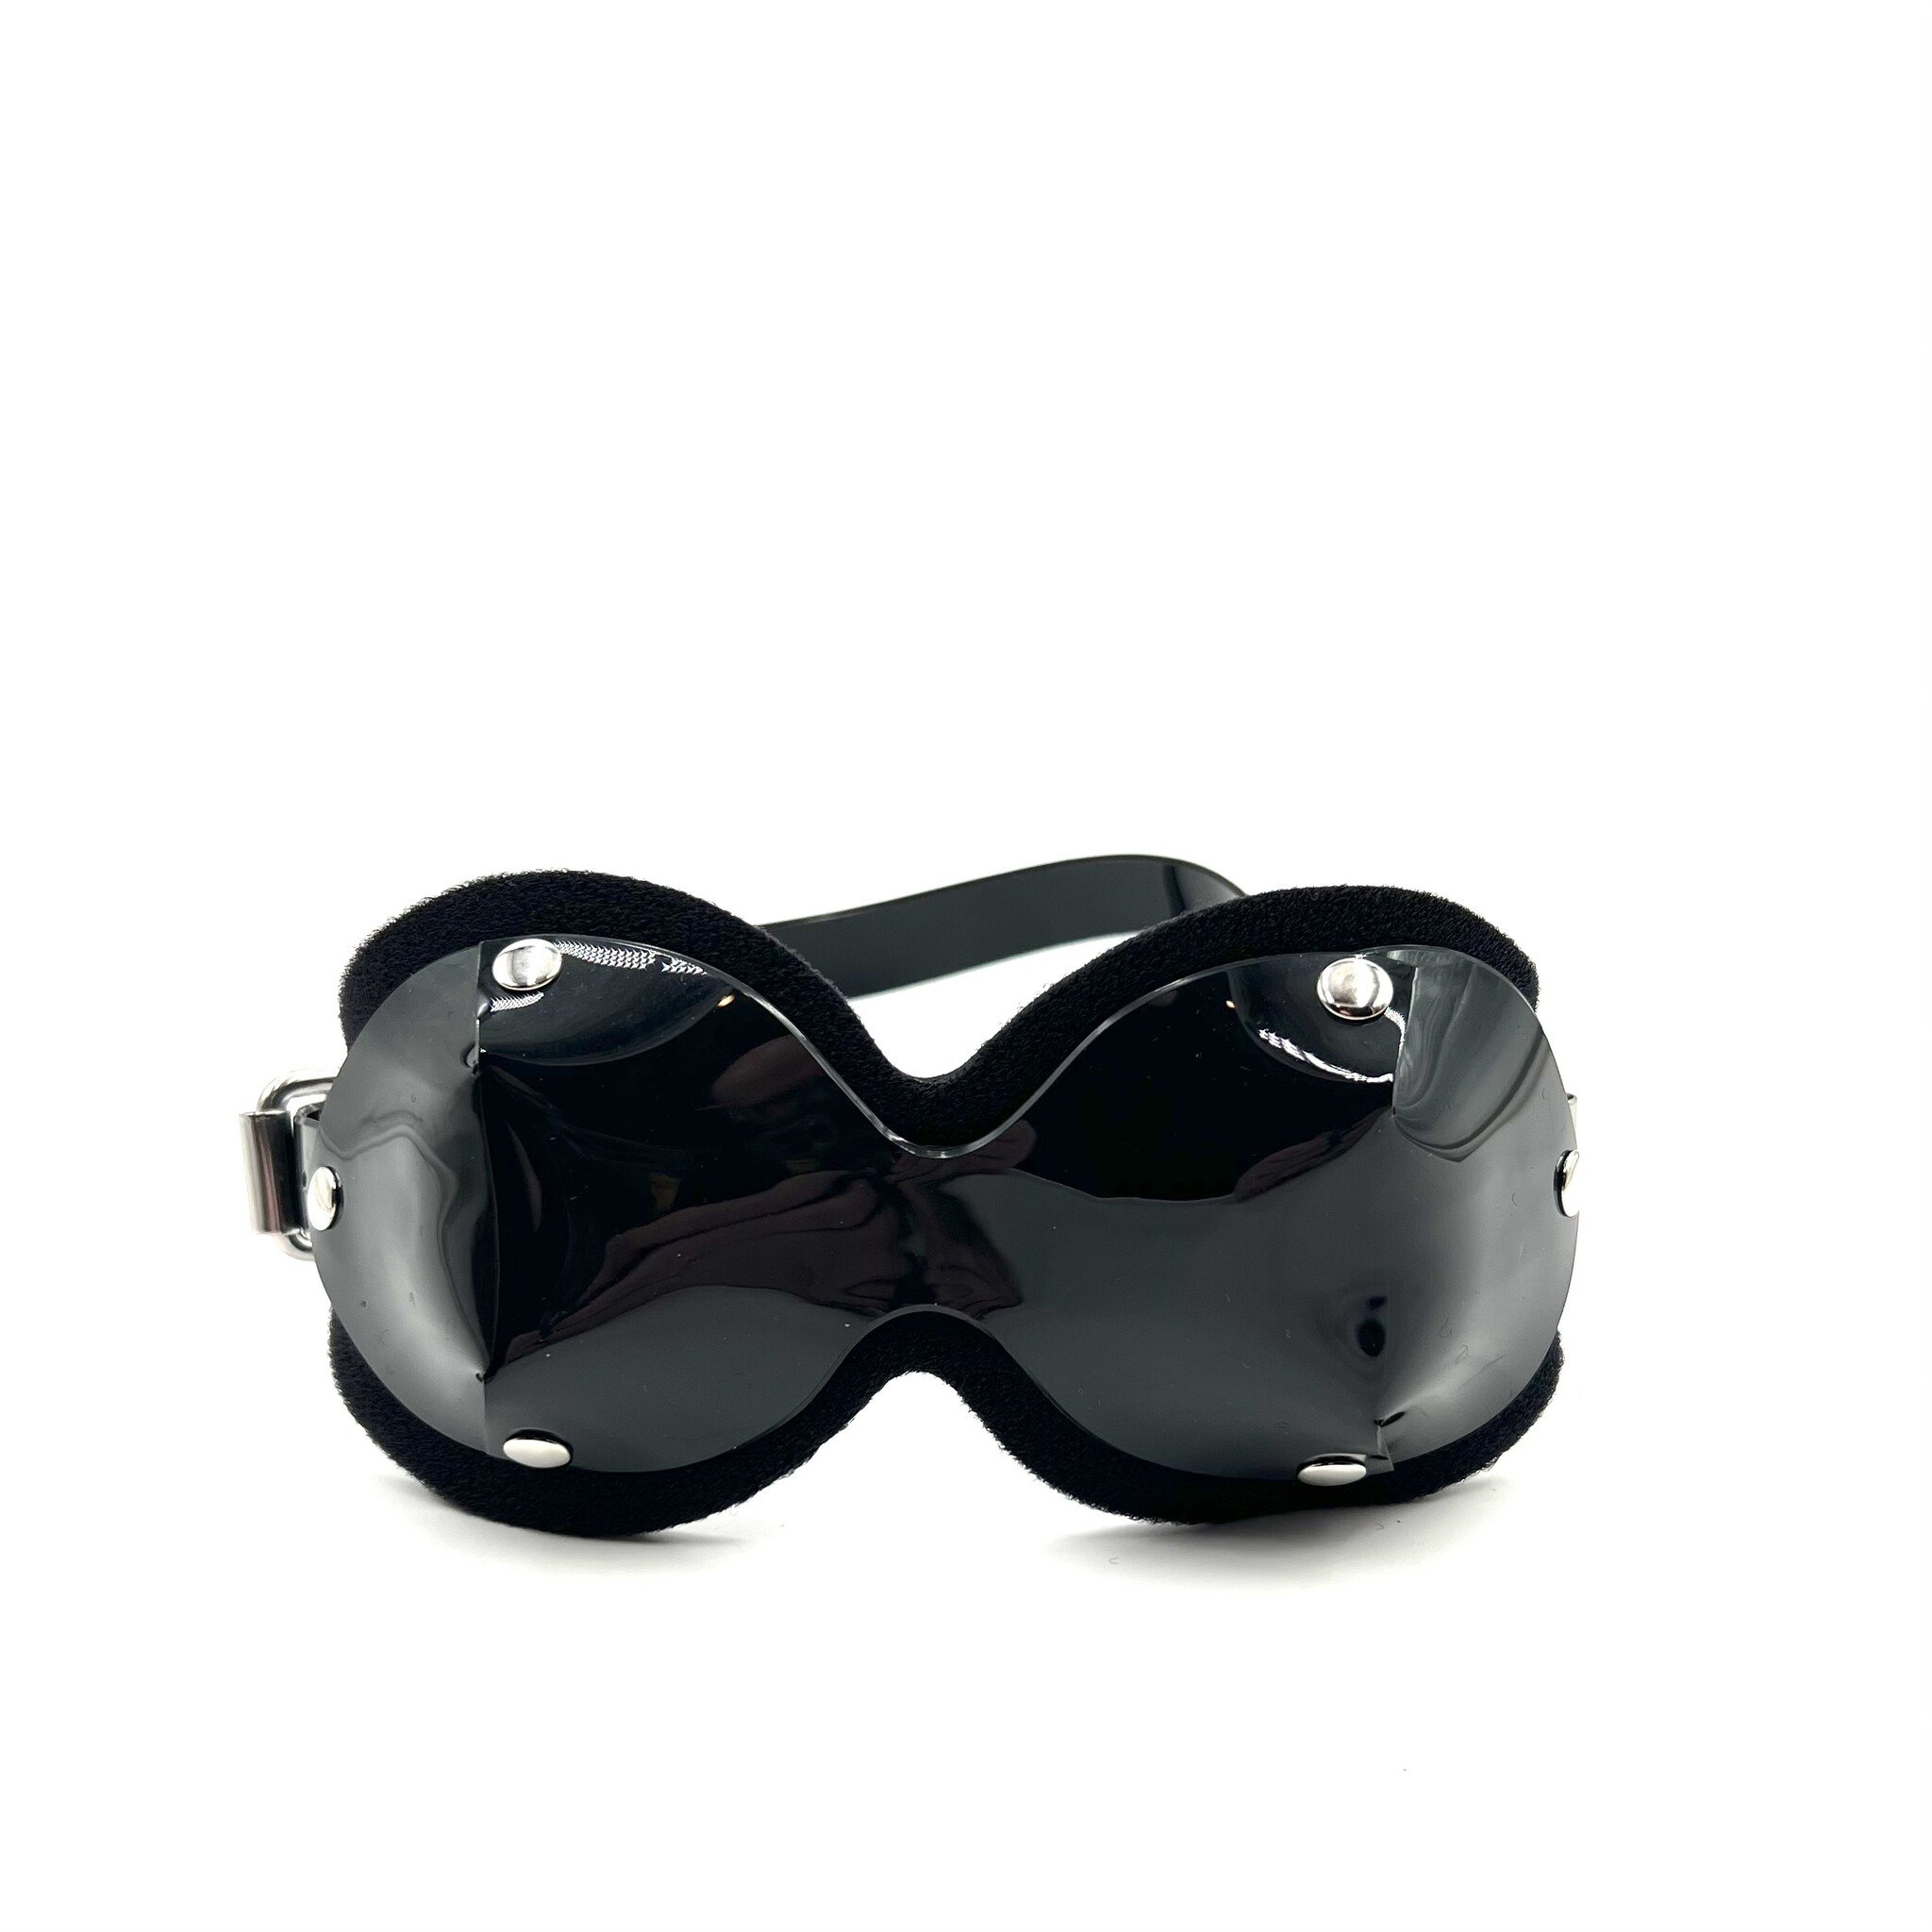 Axovus LLC > Blindfolds > The Ultimate Leather Blindfold